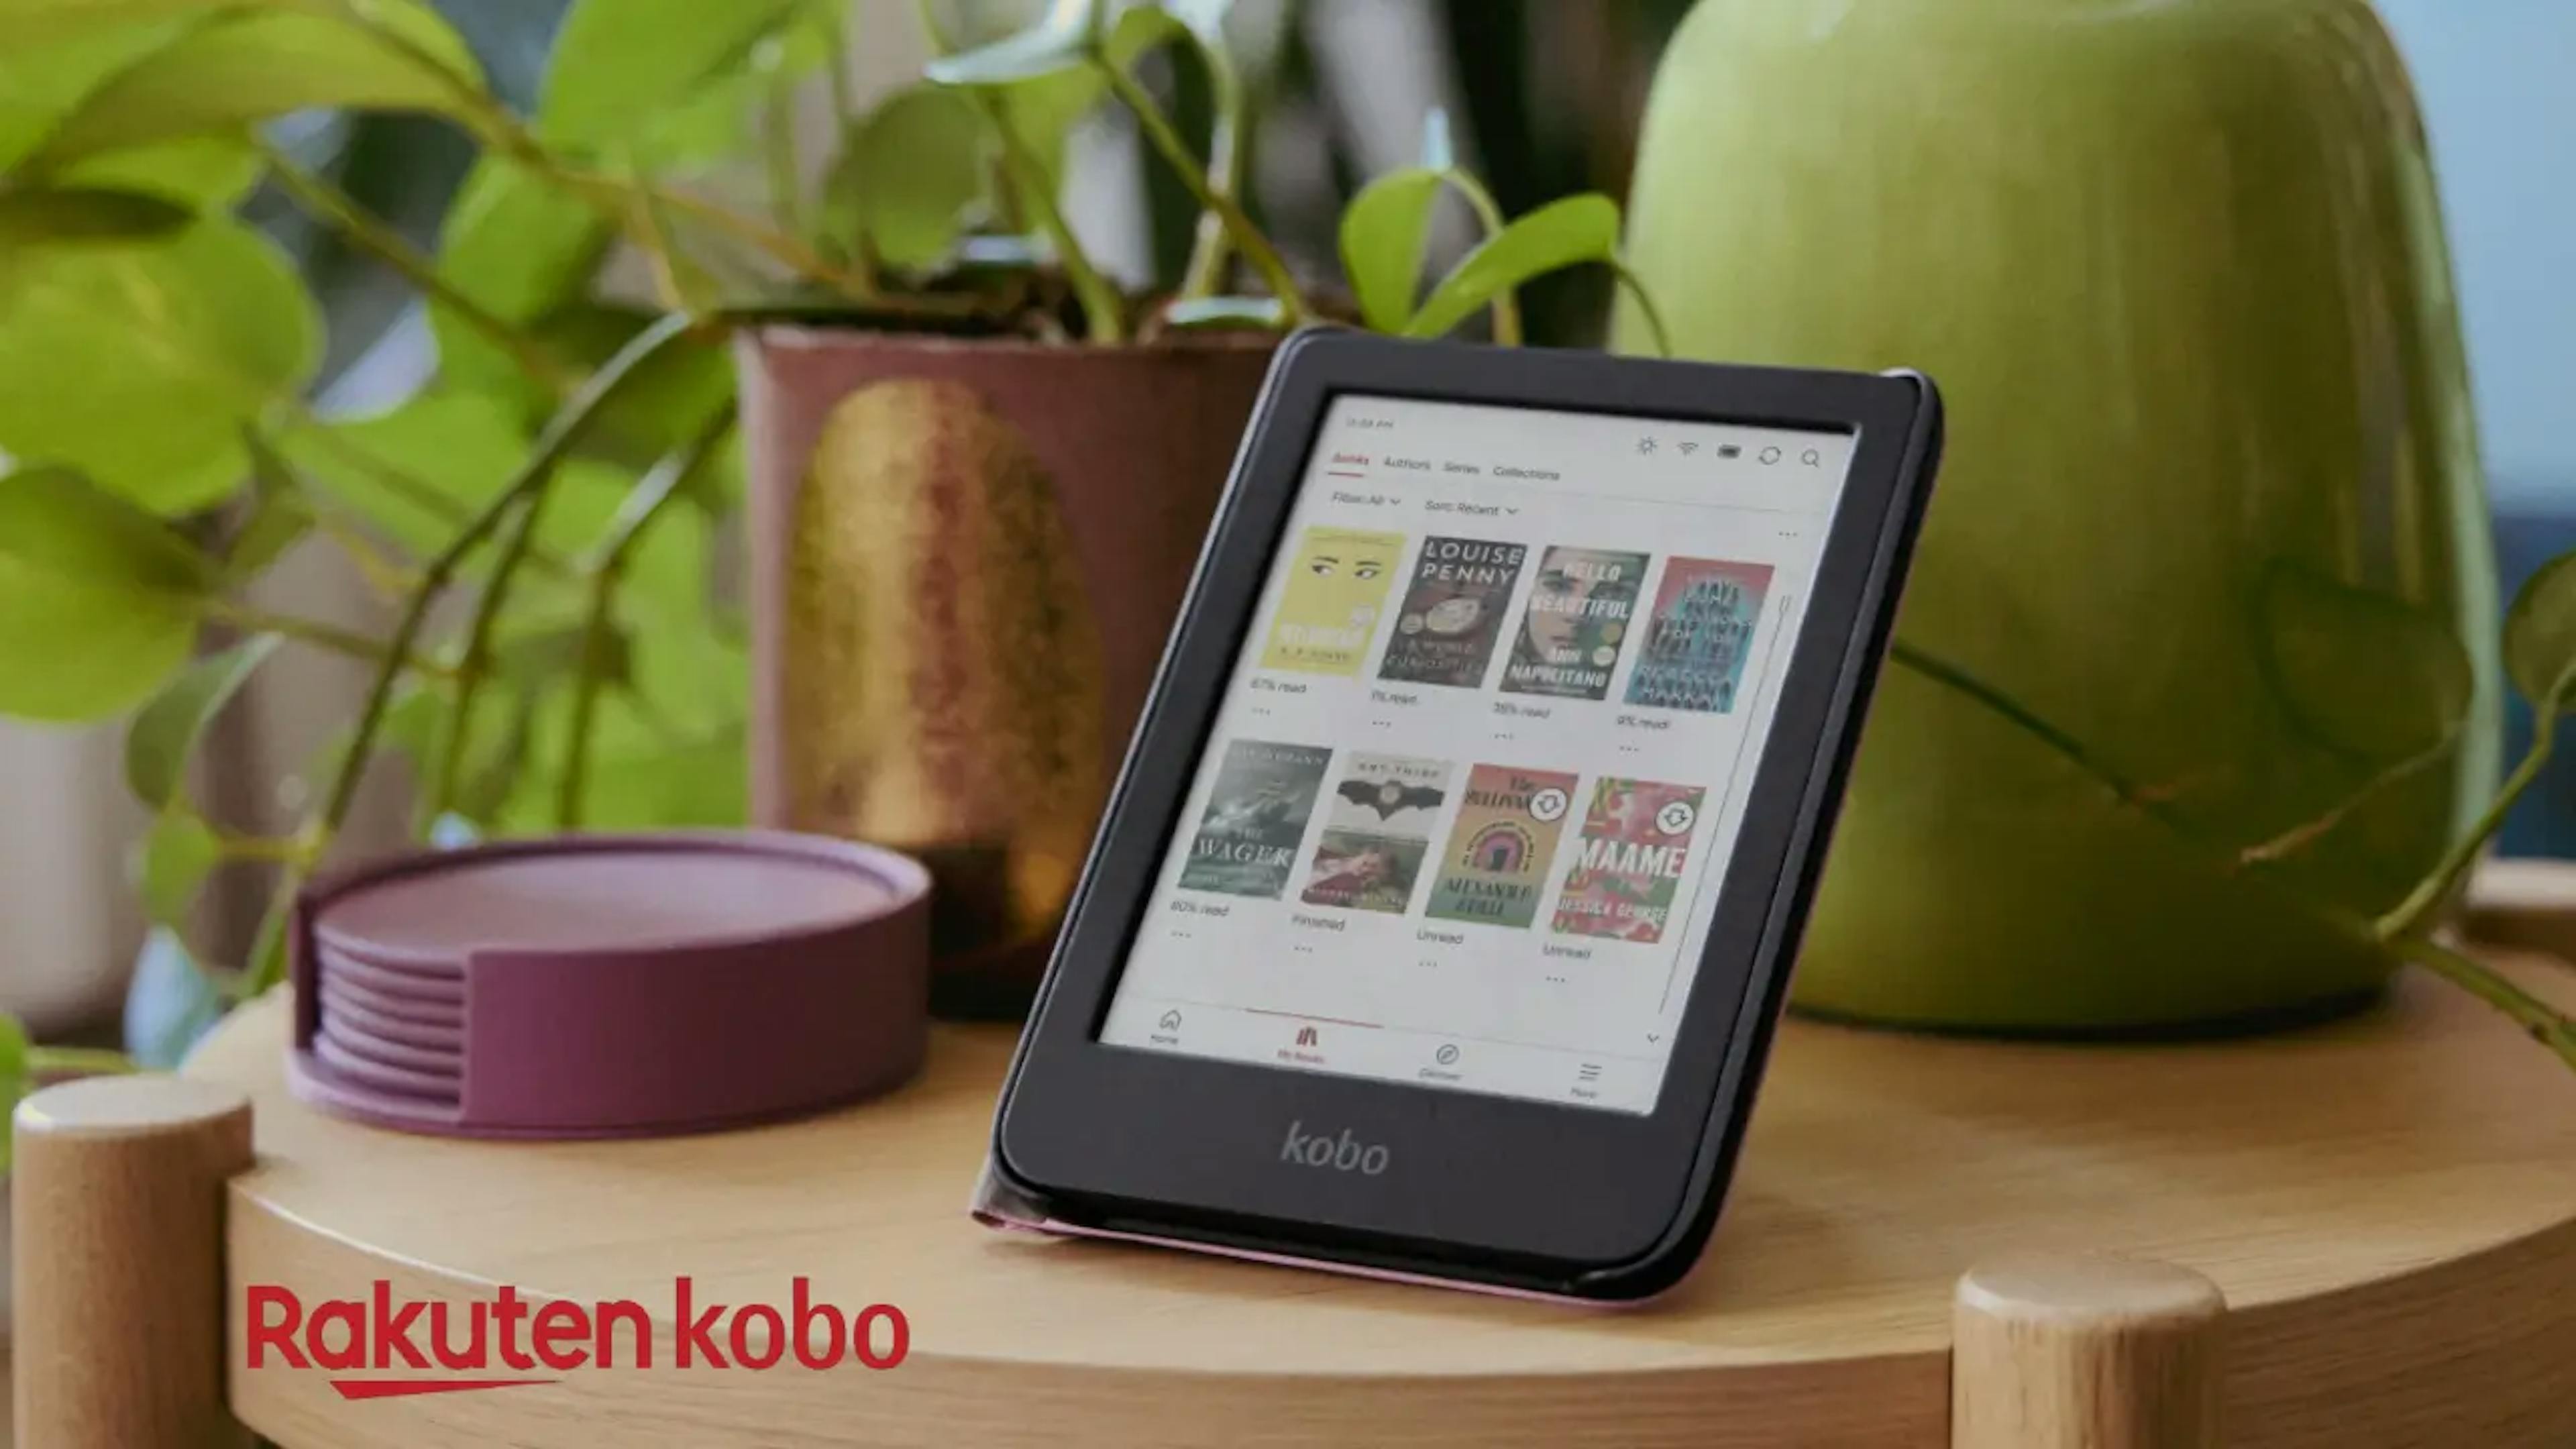 Rakuten Kobo rompe barreiras com o lançamento dos primeiros leitores digitais coloridos do mercado